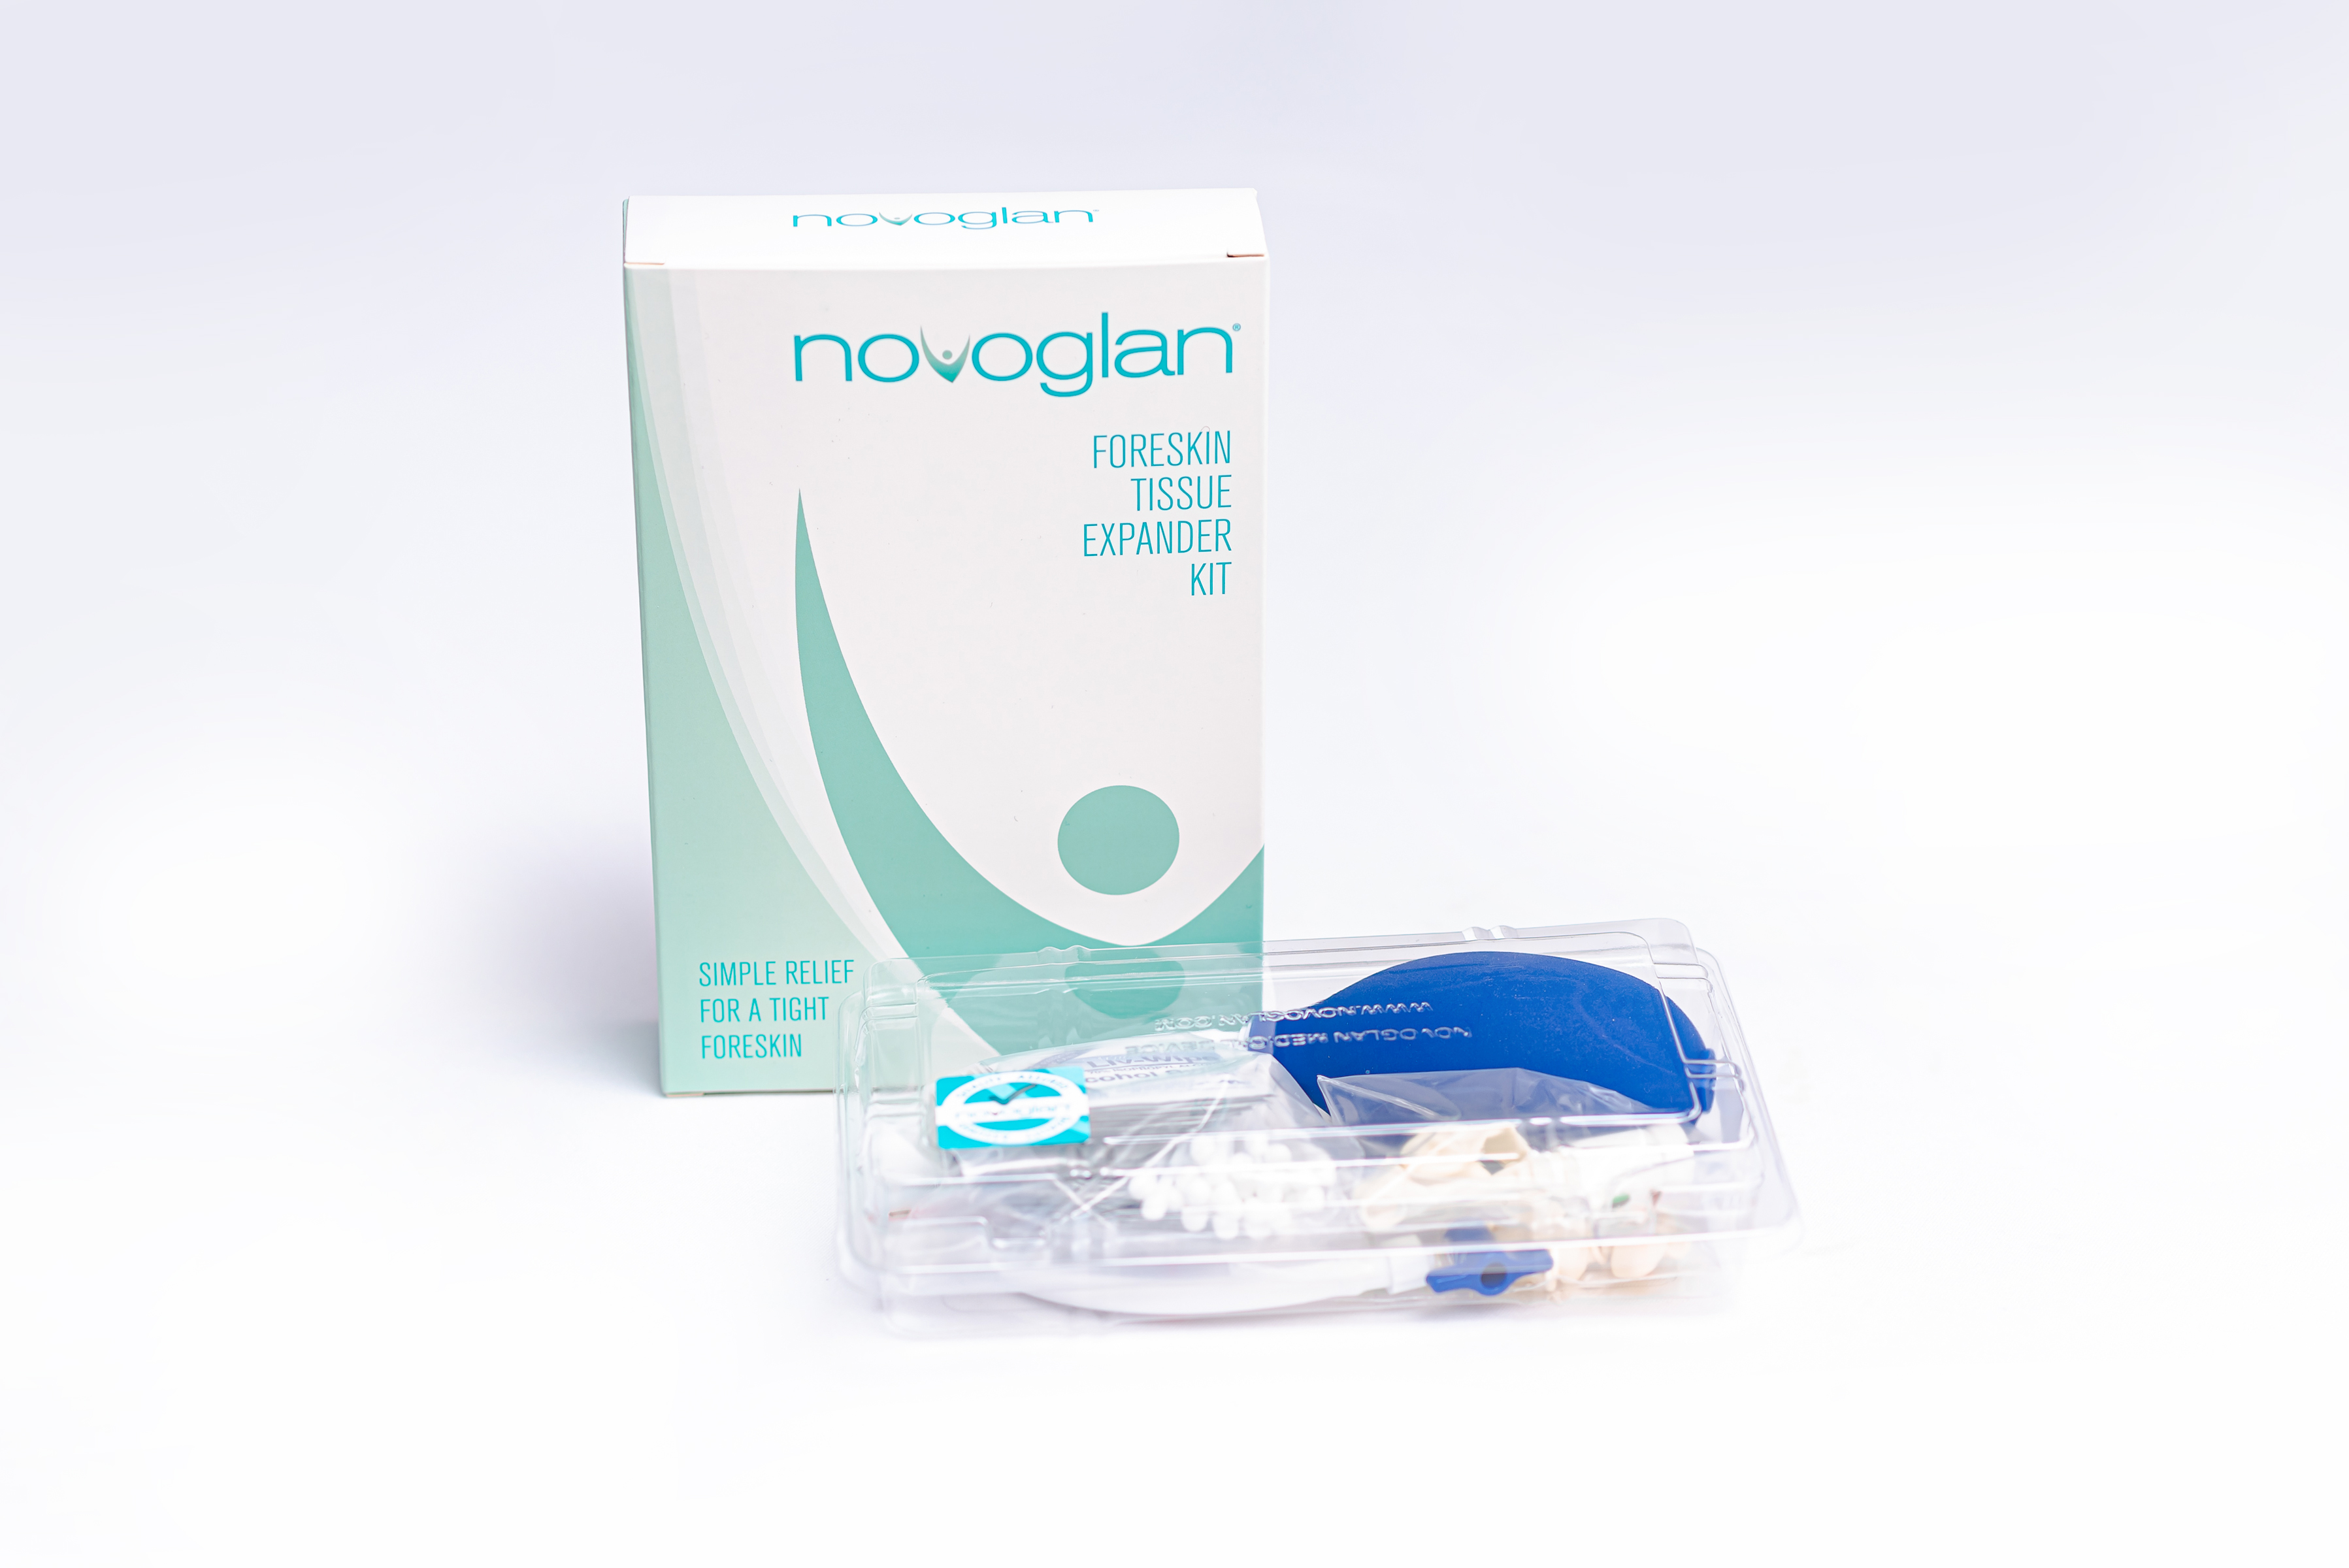 The Novoglan Foreskin Phimosis Treatment